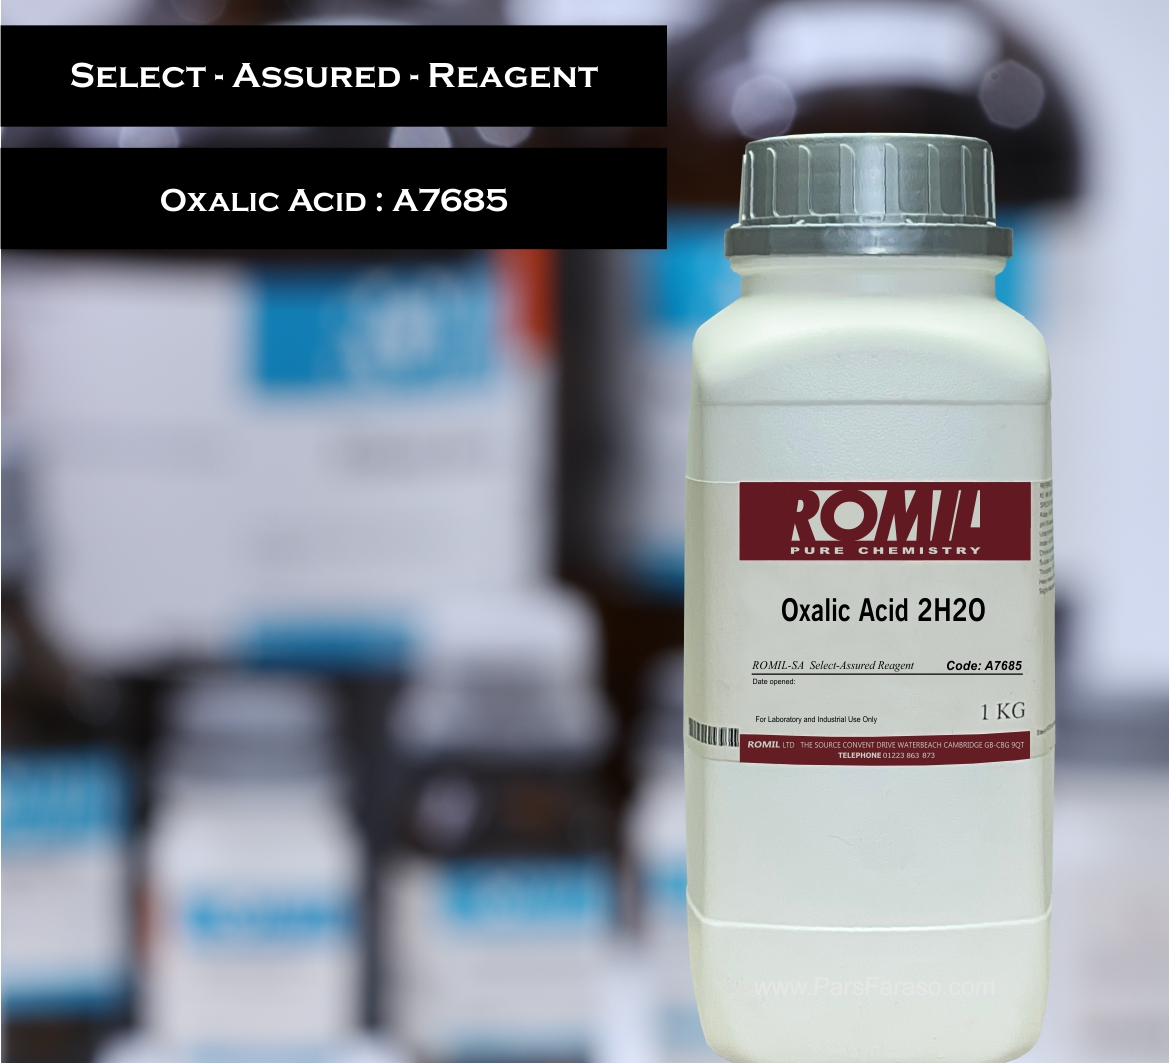 اگزالیک اسید - کد کاتالوگ روميل A7685 - خرید و فروش مواد شیمیایی